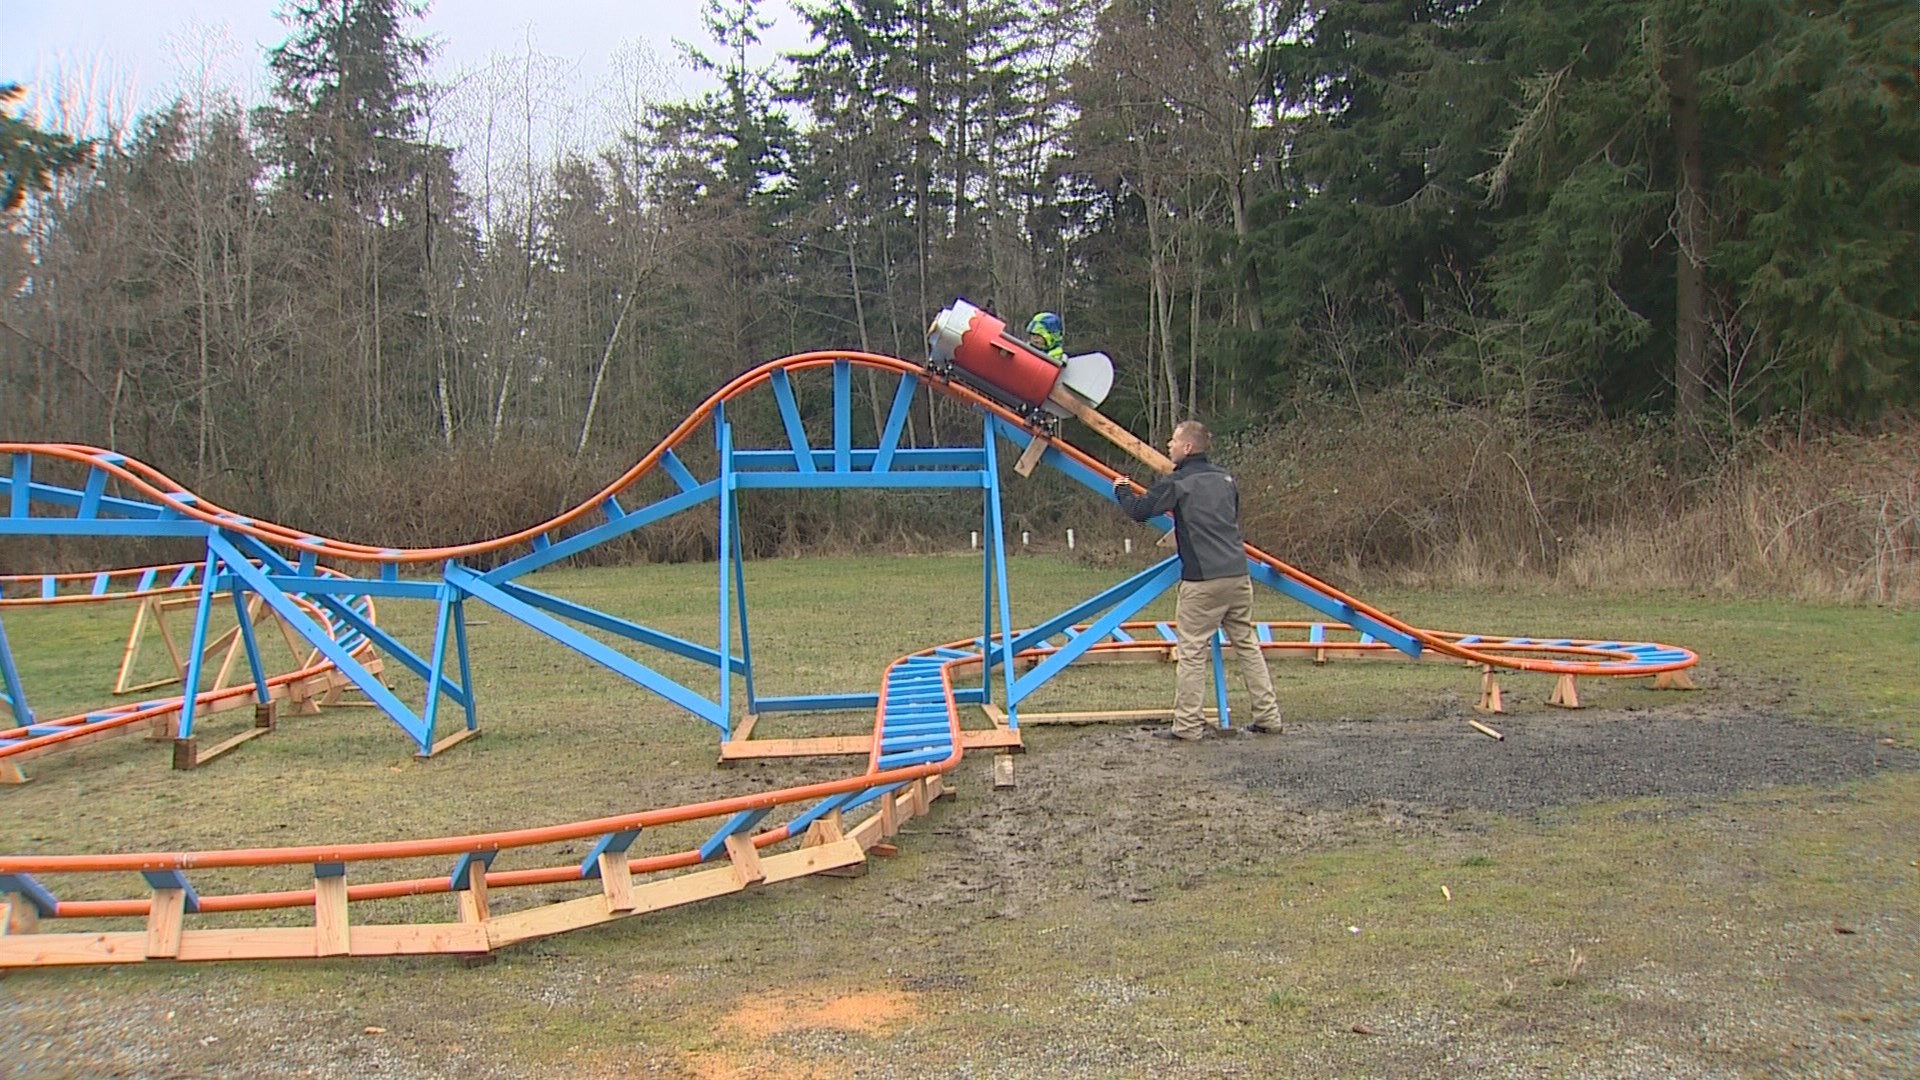 Dad Builds Backyard Roller Coaster For Son | WFMYNEWS2.com